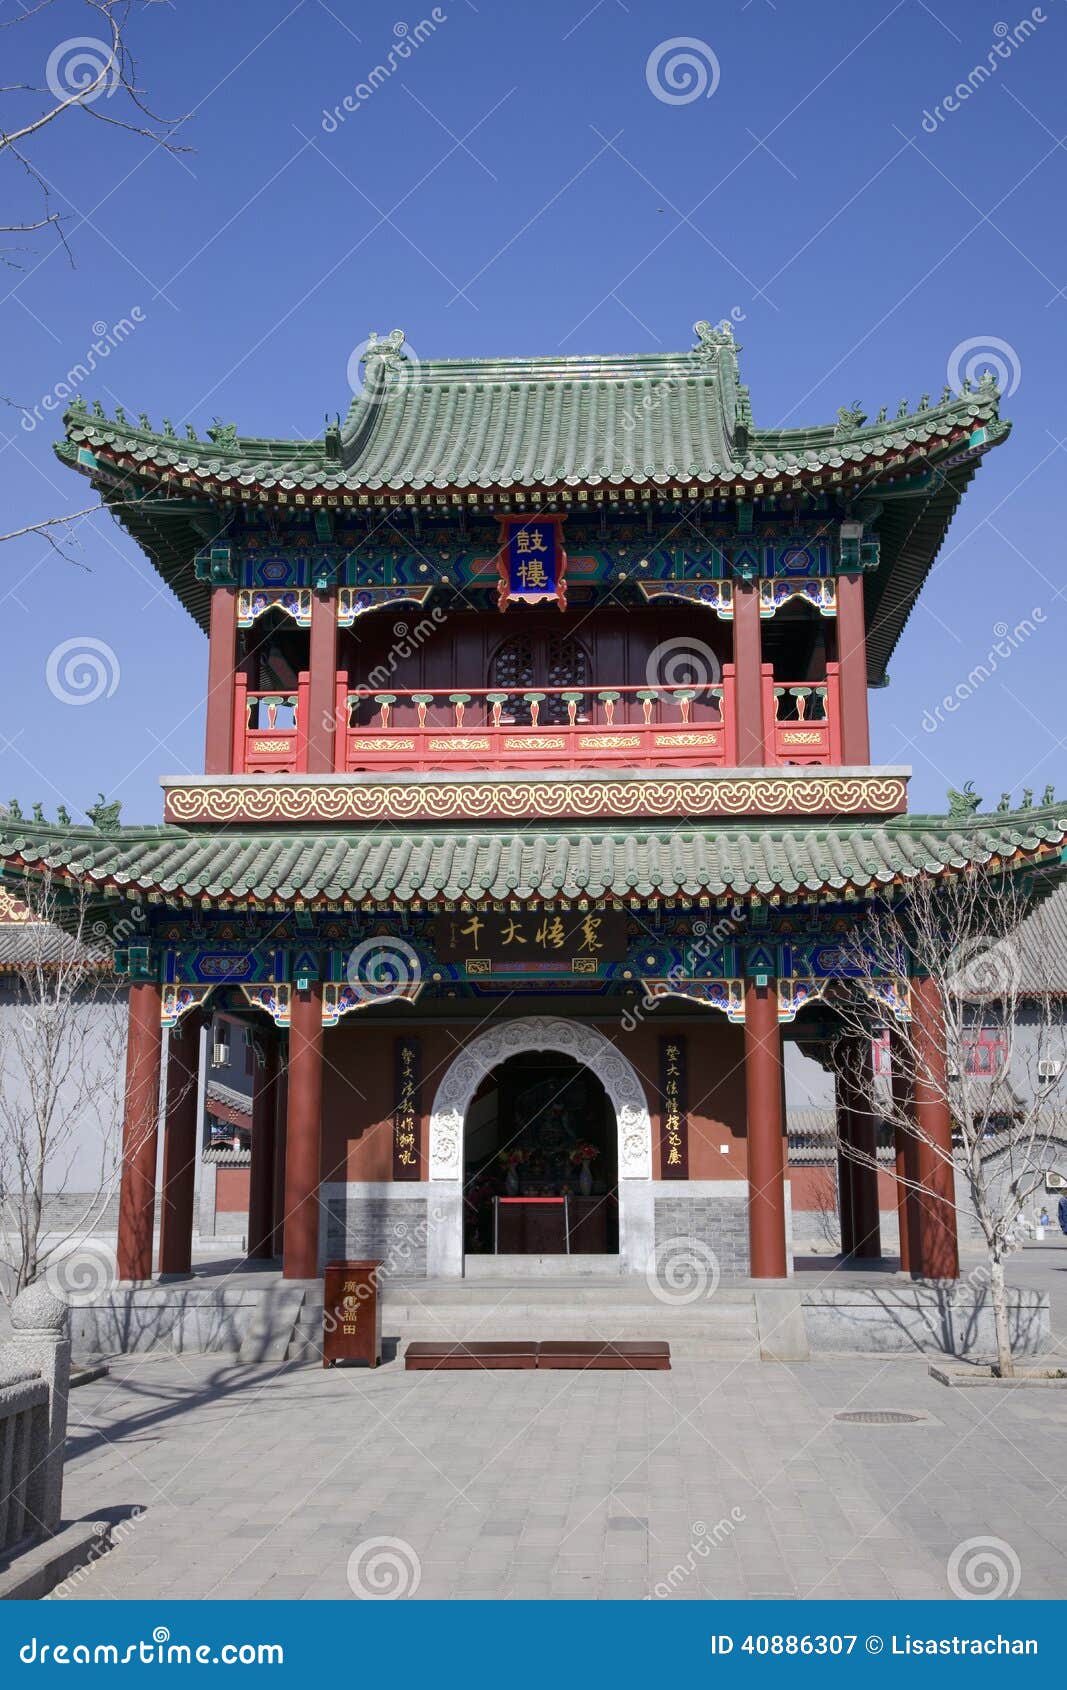 confucianism architecture